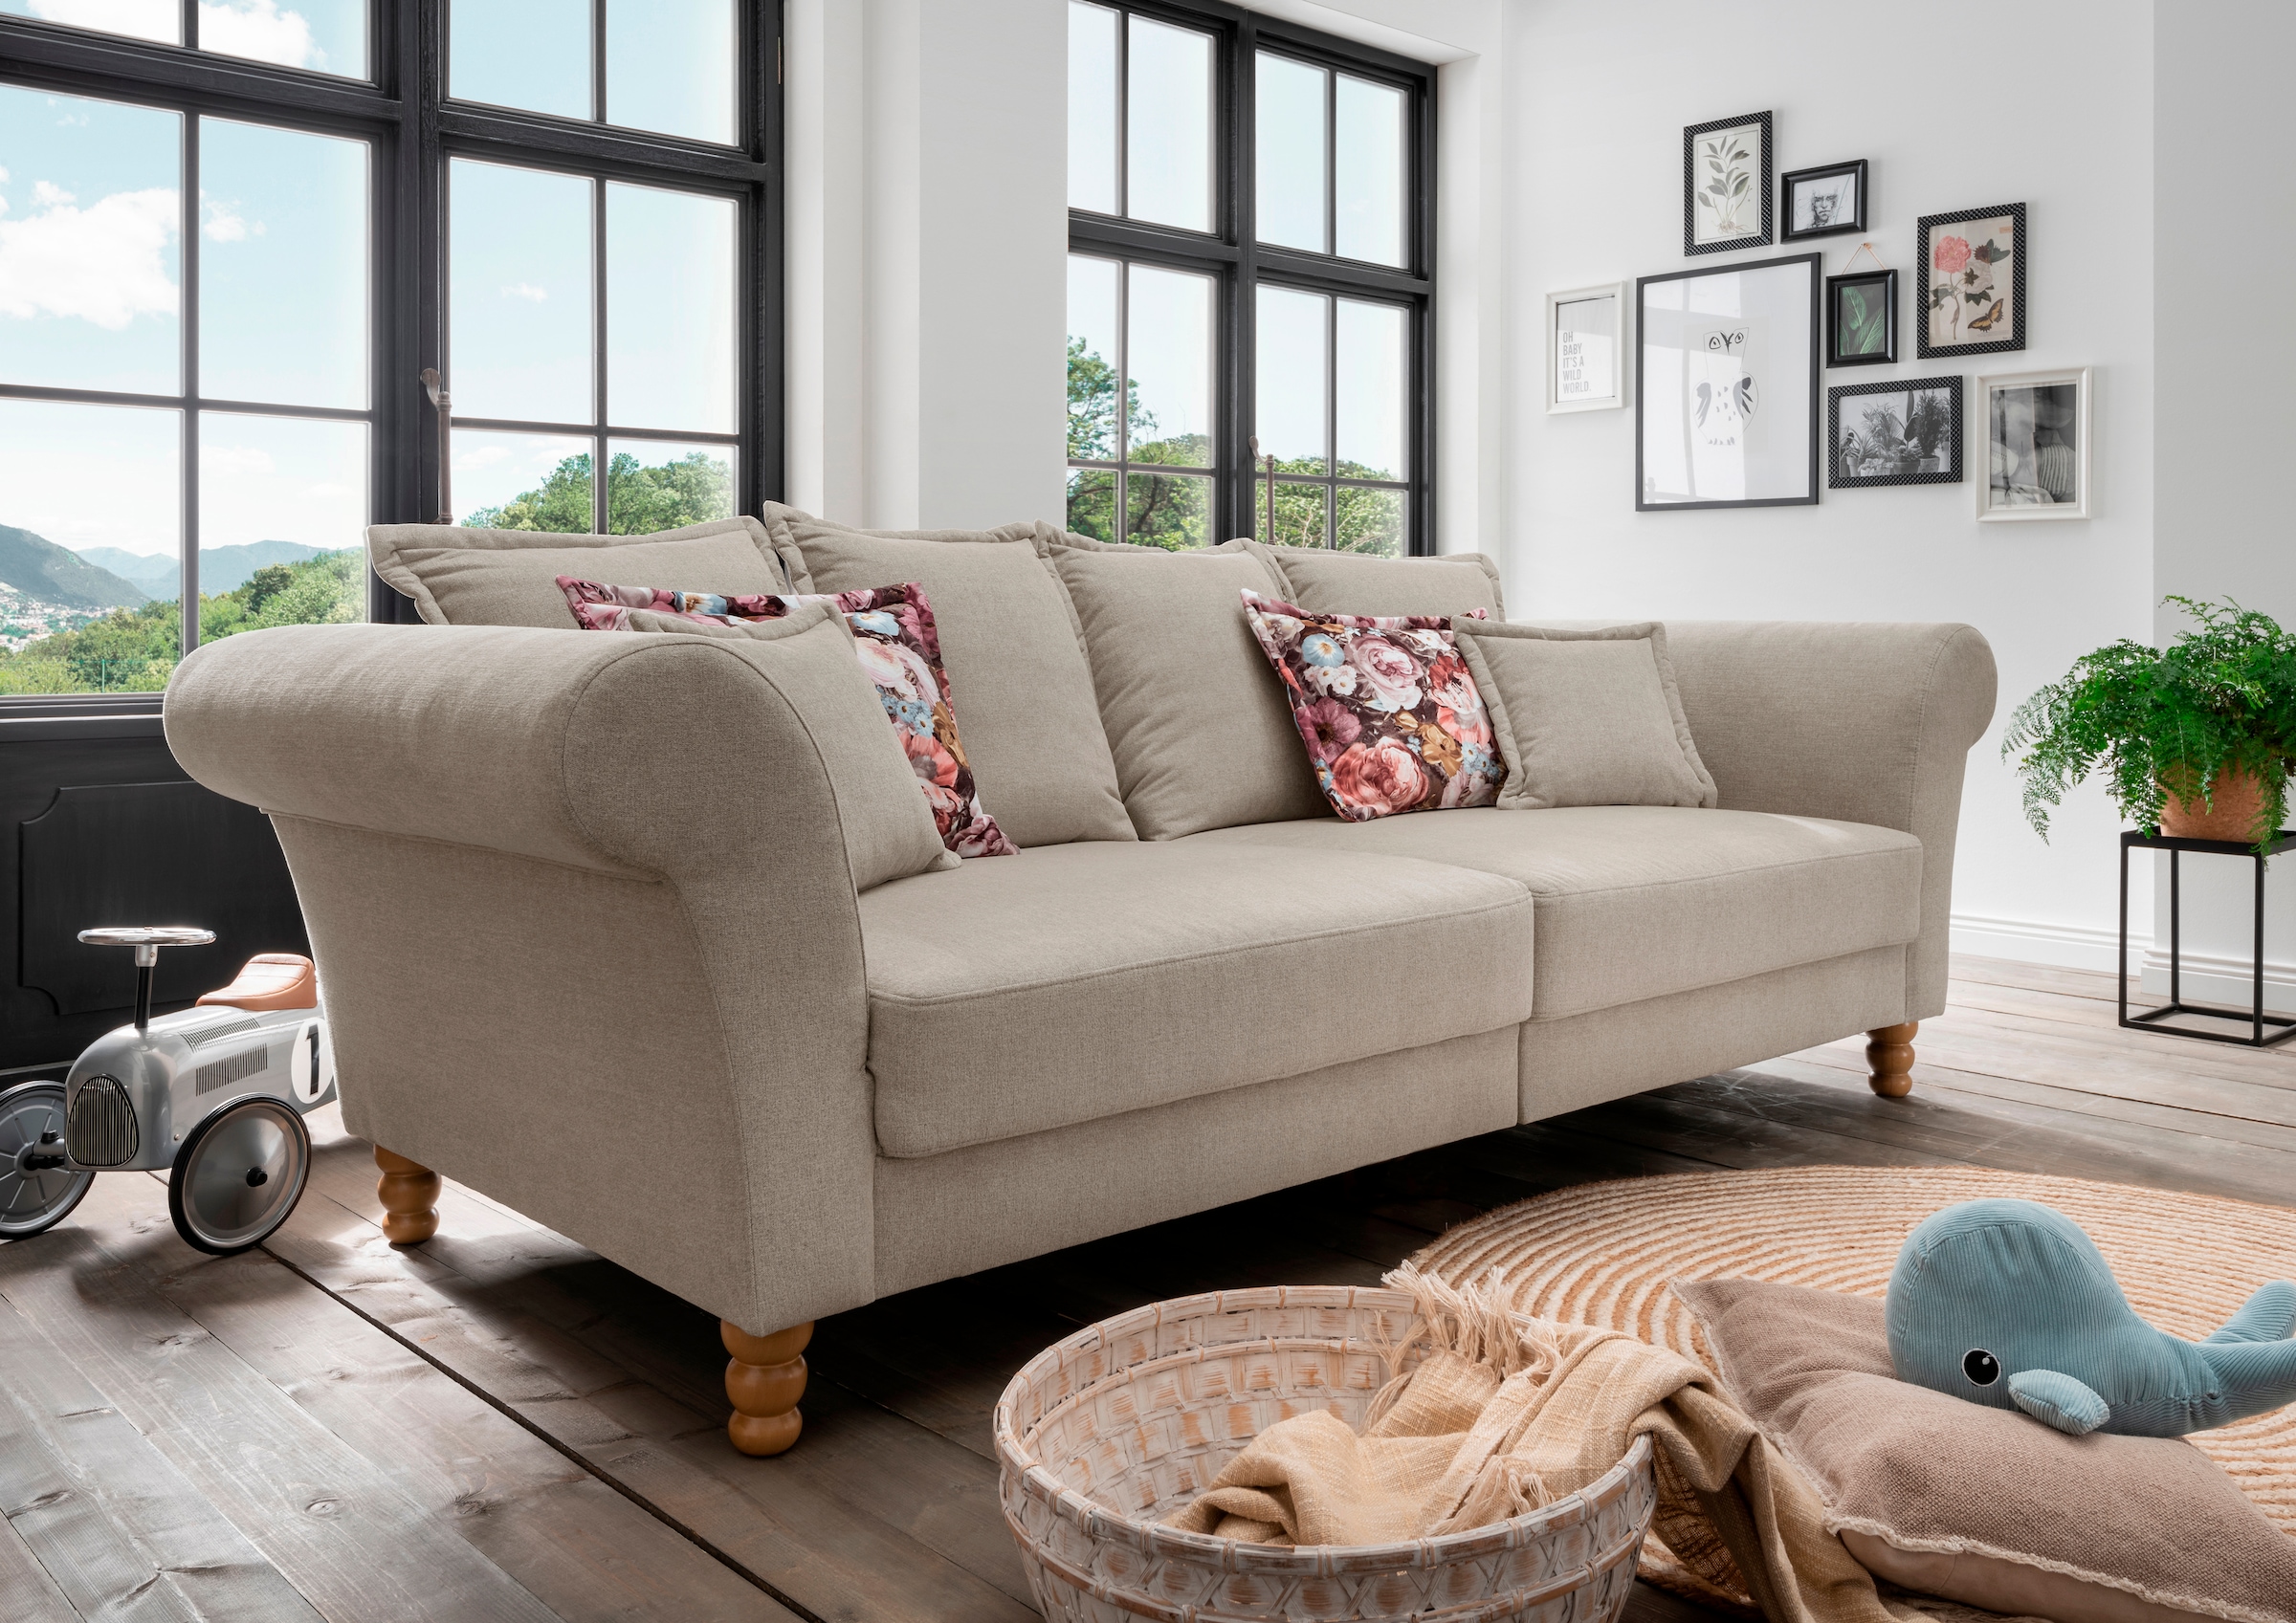 Home OTTO »Tassilo« kaufen affaire Big-Sofa bei